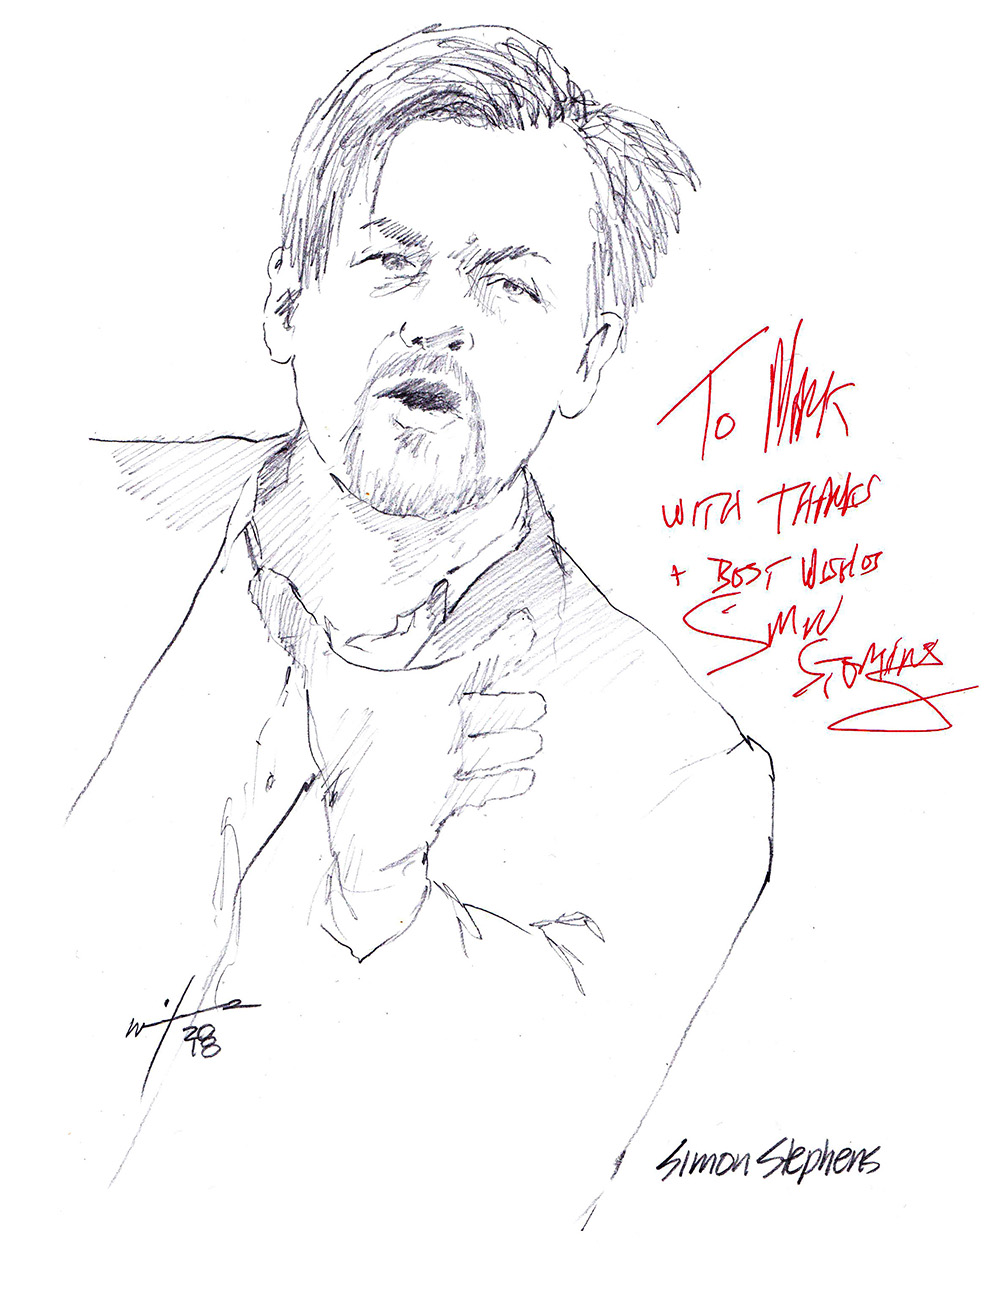 Autographed drawing of writer Simon Stephens